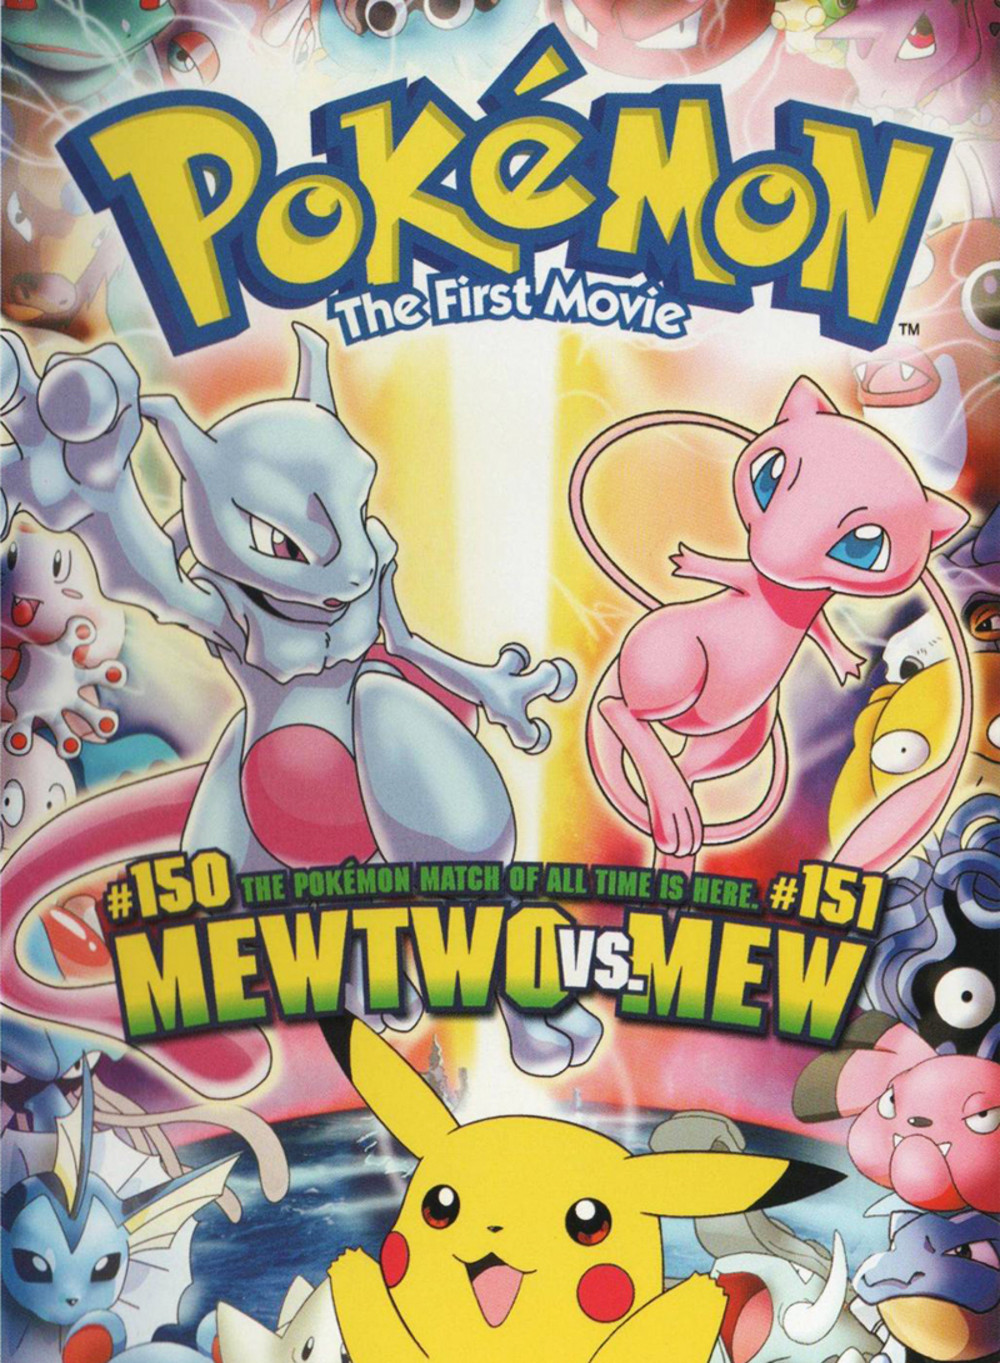 Watch Ash Take On Mewtwo in Pokémon: The First Movie on Pokémon TV